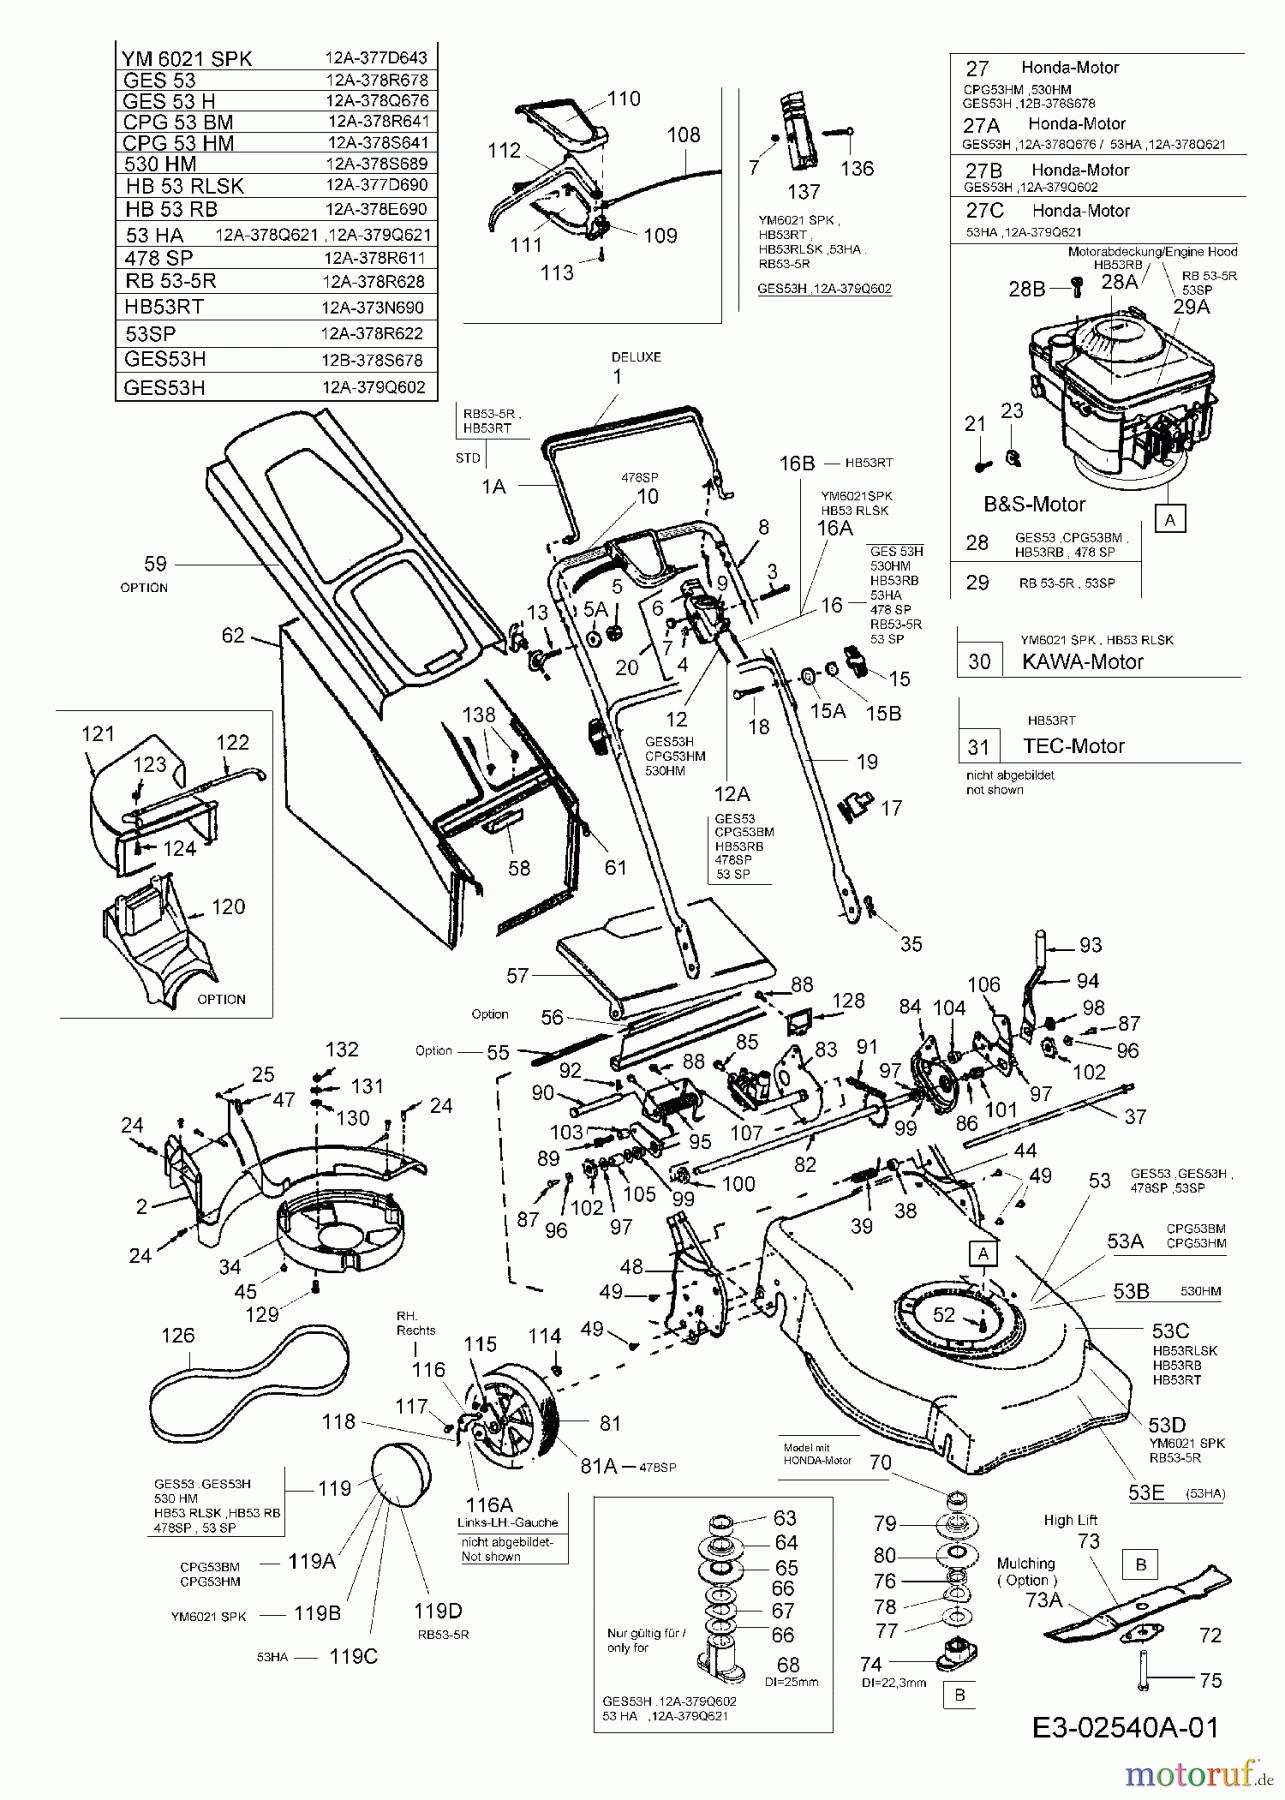  MTD Motormäher mit Antrieb 53 SPB 12A-378R622  (2005) Grundgerät